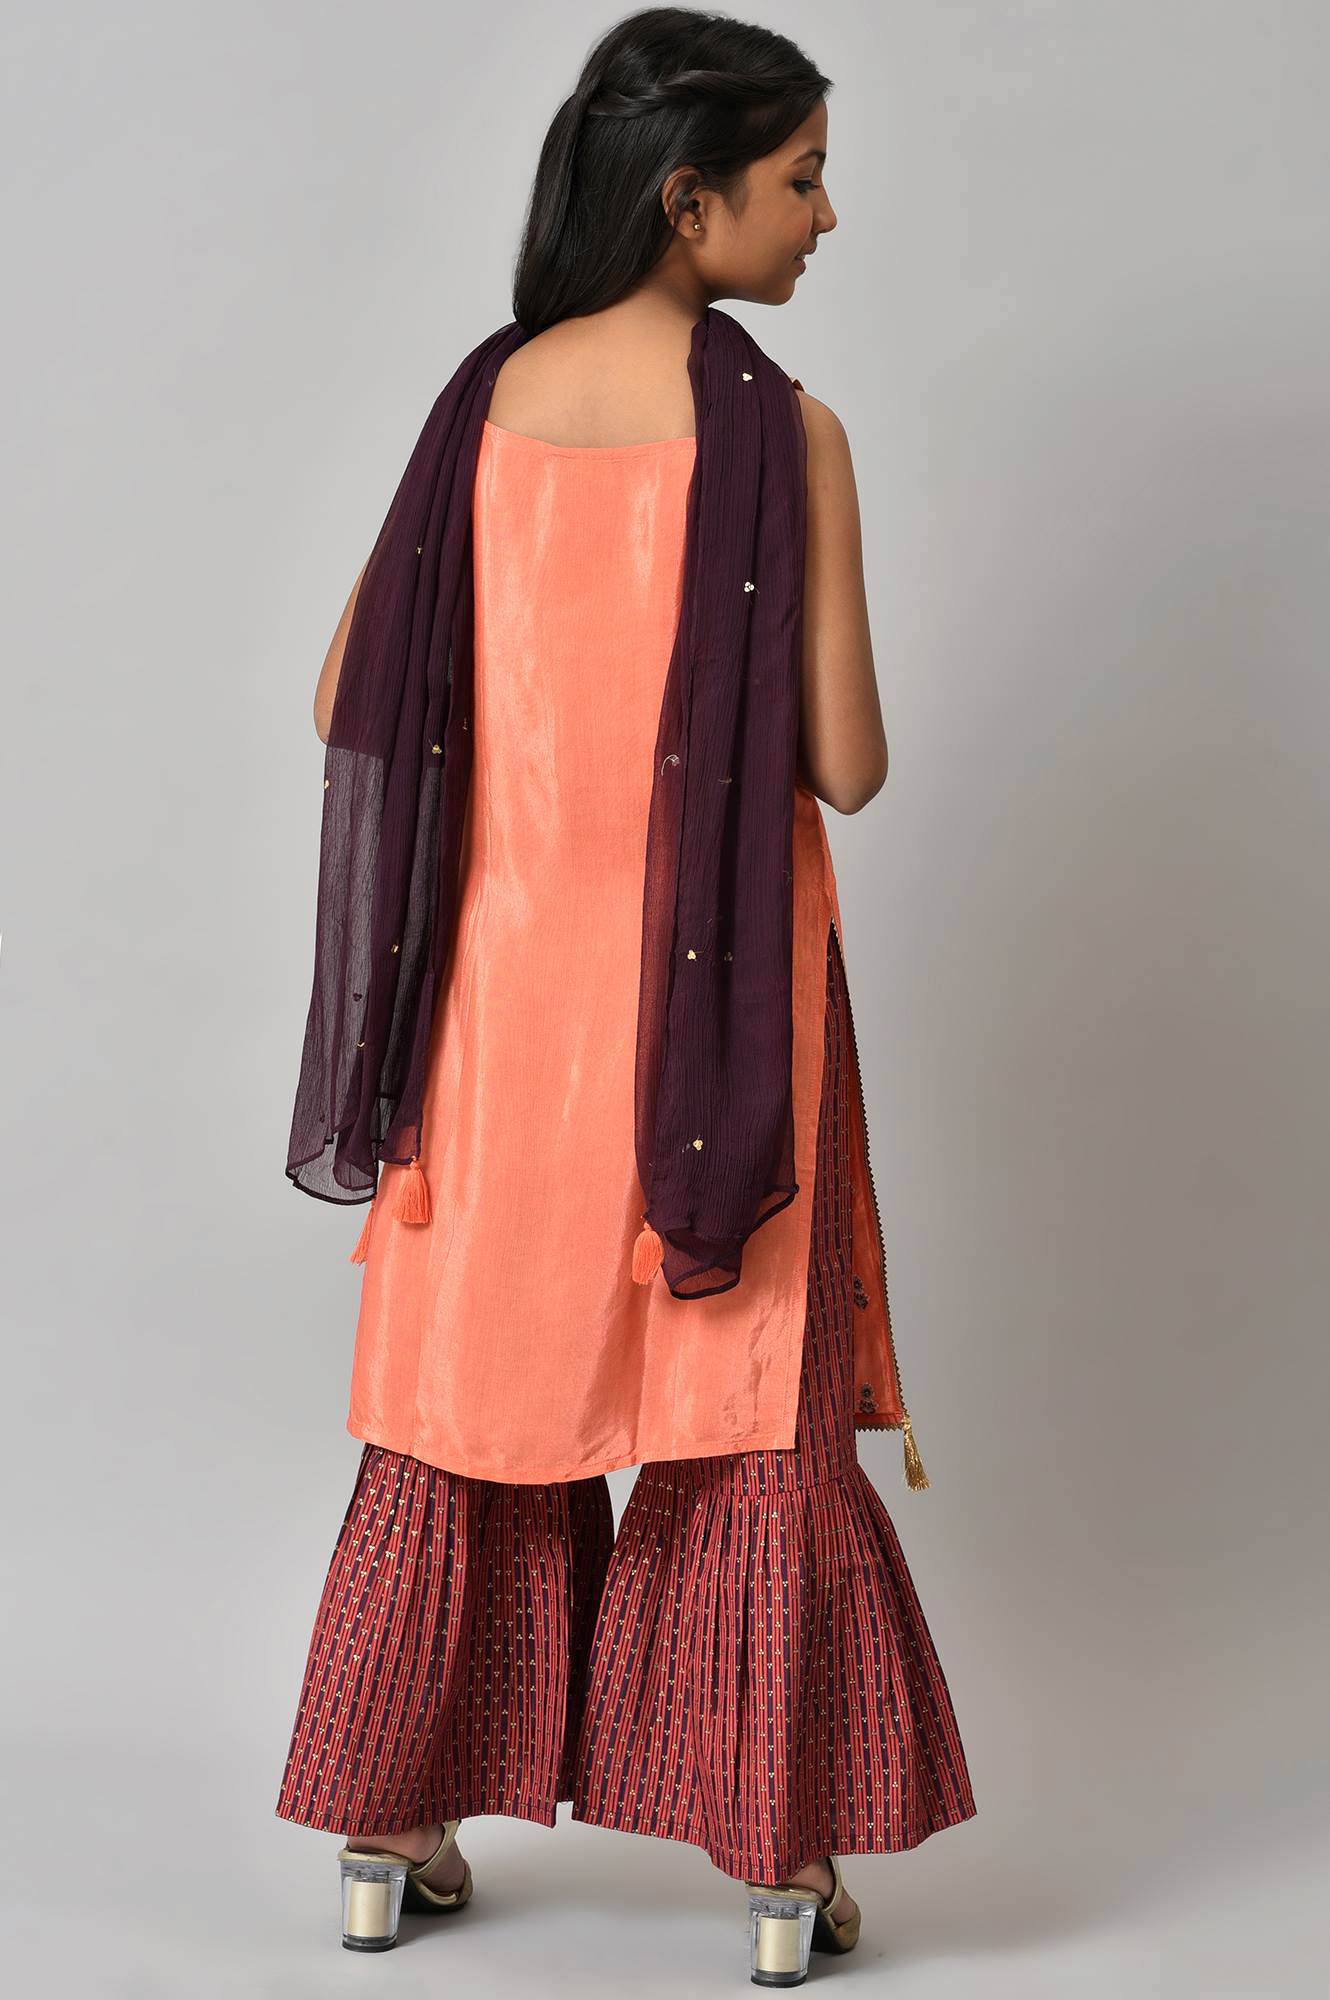 LIVA Girls Orange Embroidered kurta with Purple Sharar and Dupatta